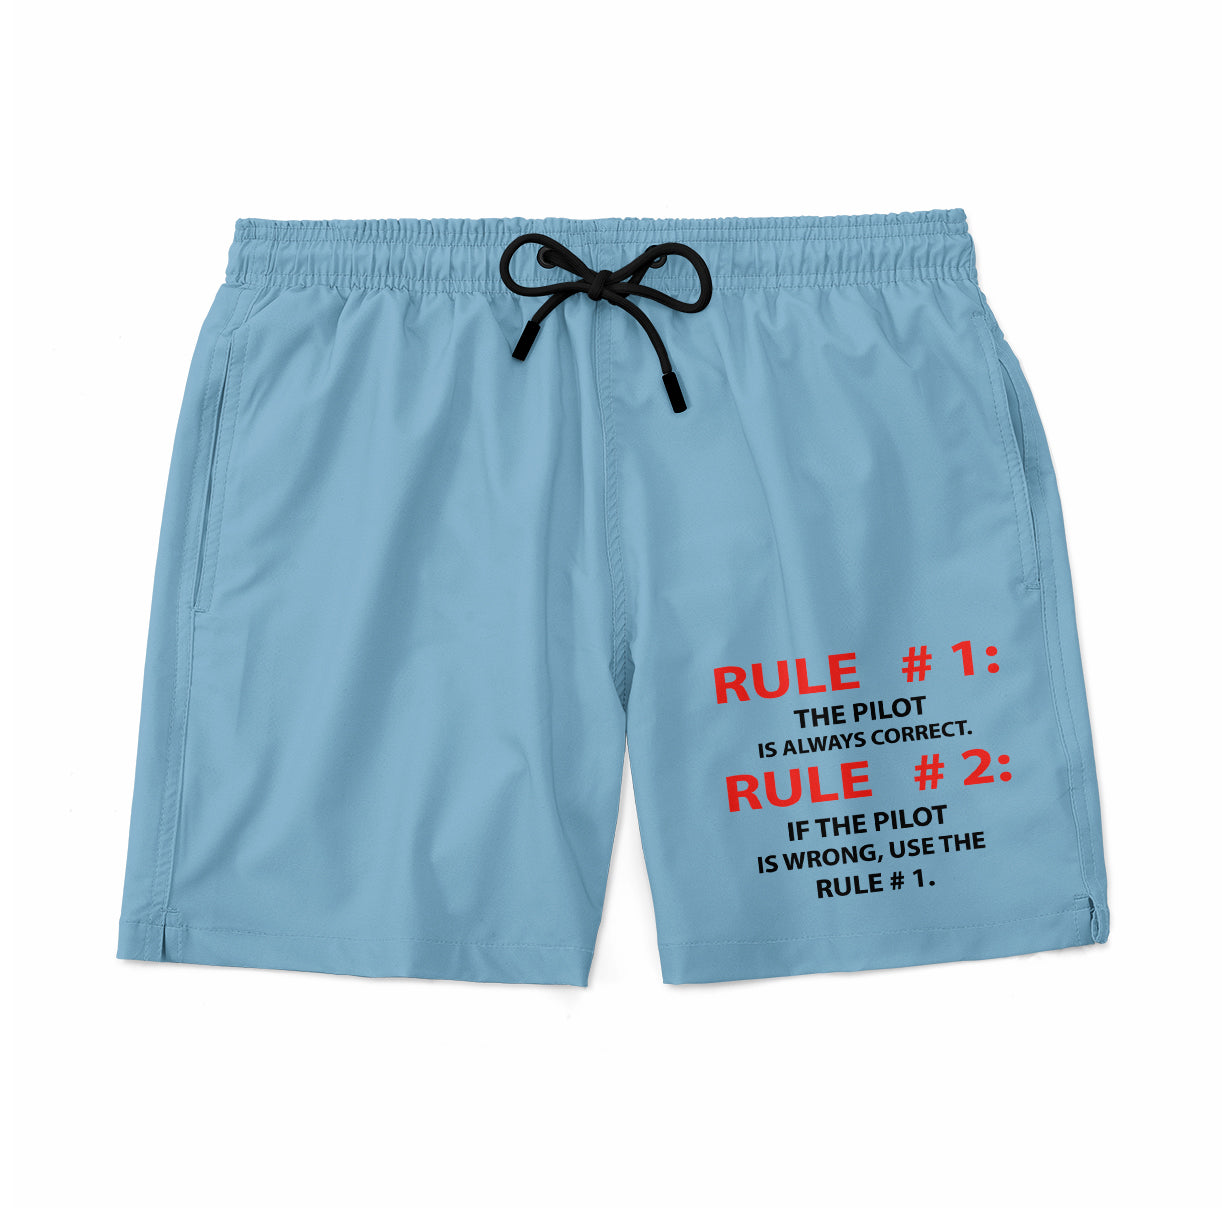 Rule 1 - Pilot is Always Correct Designed Swim Trunks & Shorts